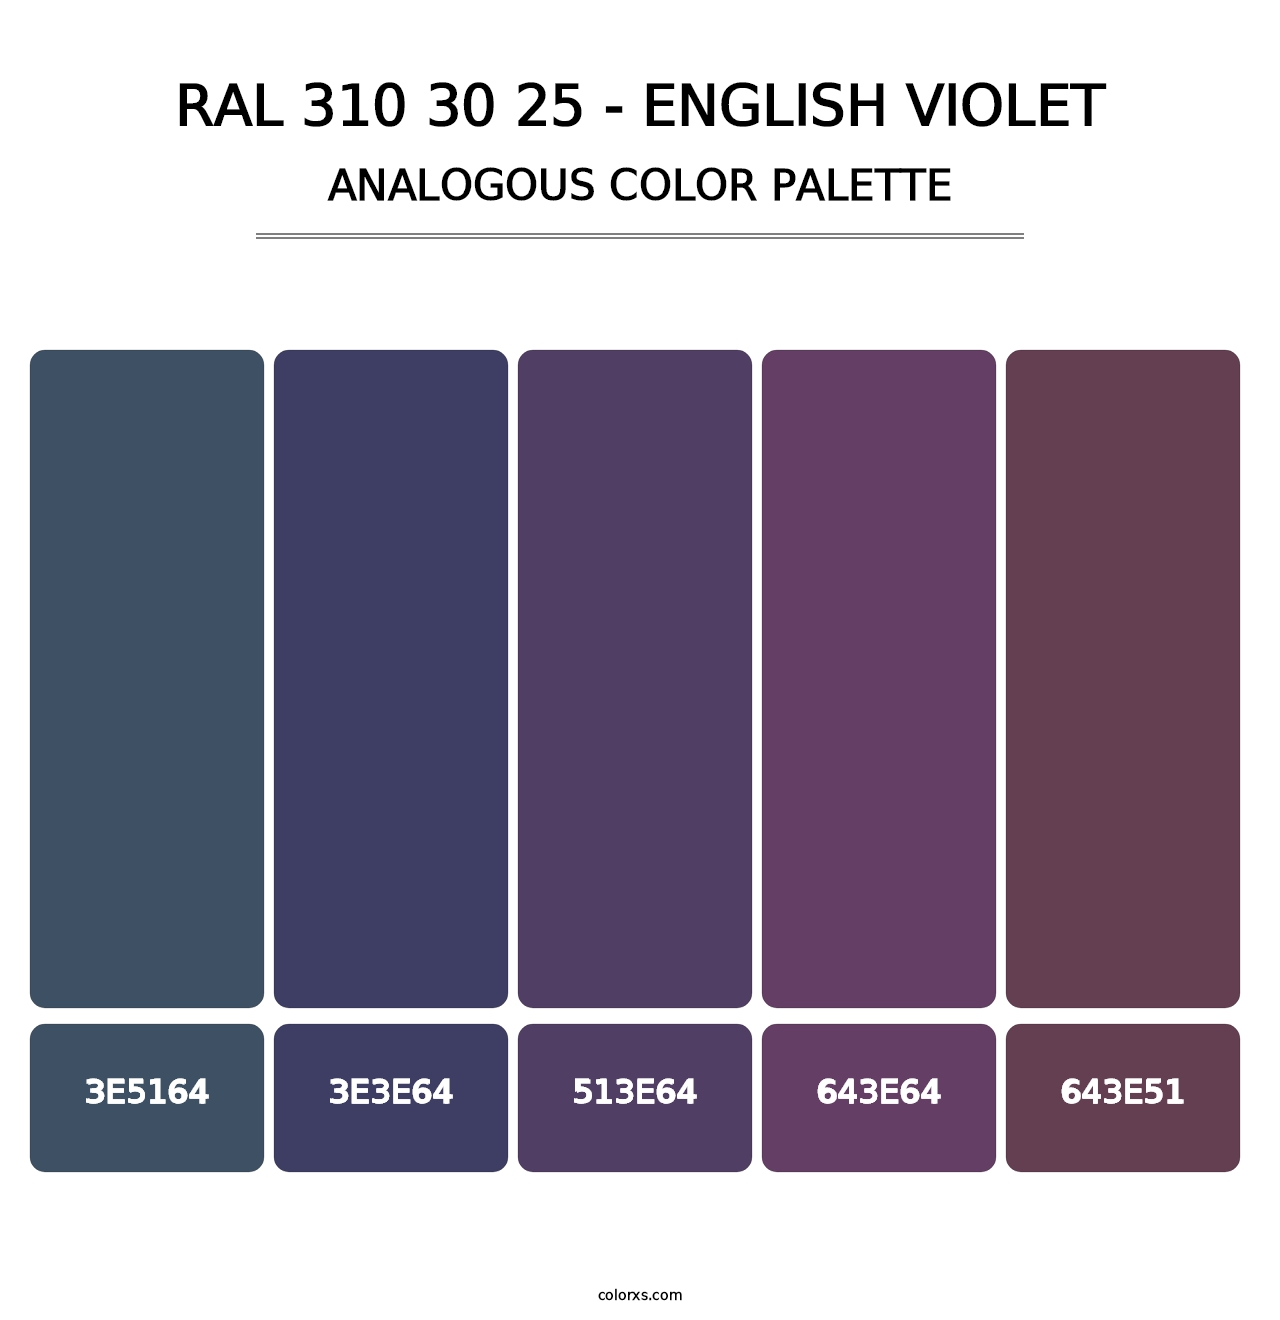 RAL 310 30 25 - English Violet - Analogous Color Palette